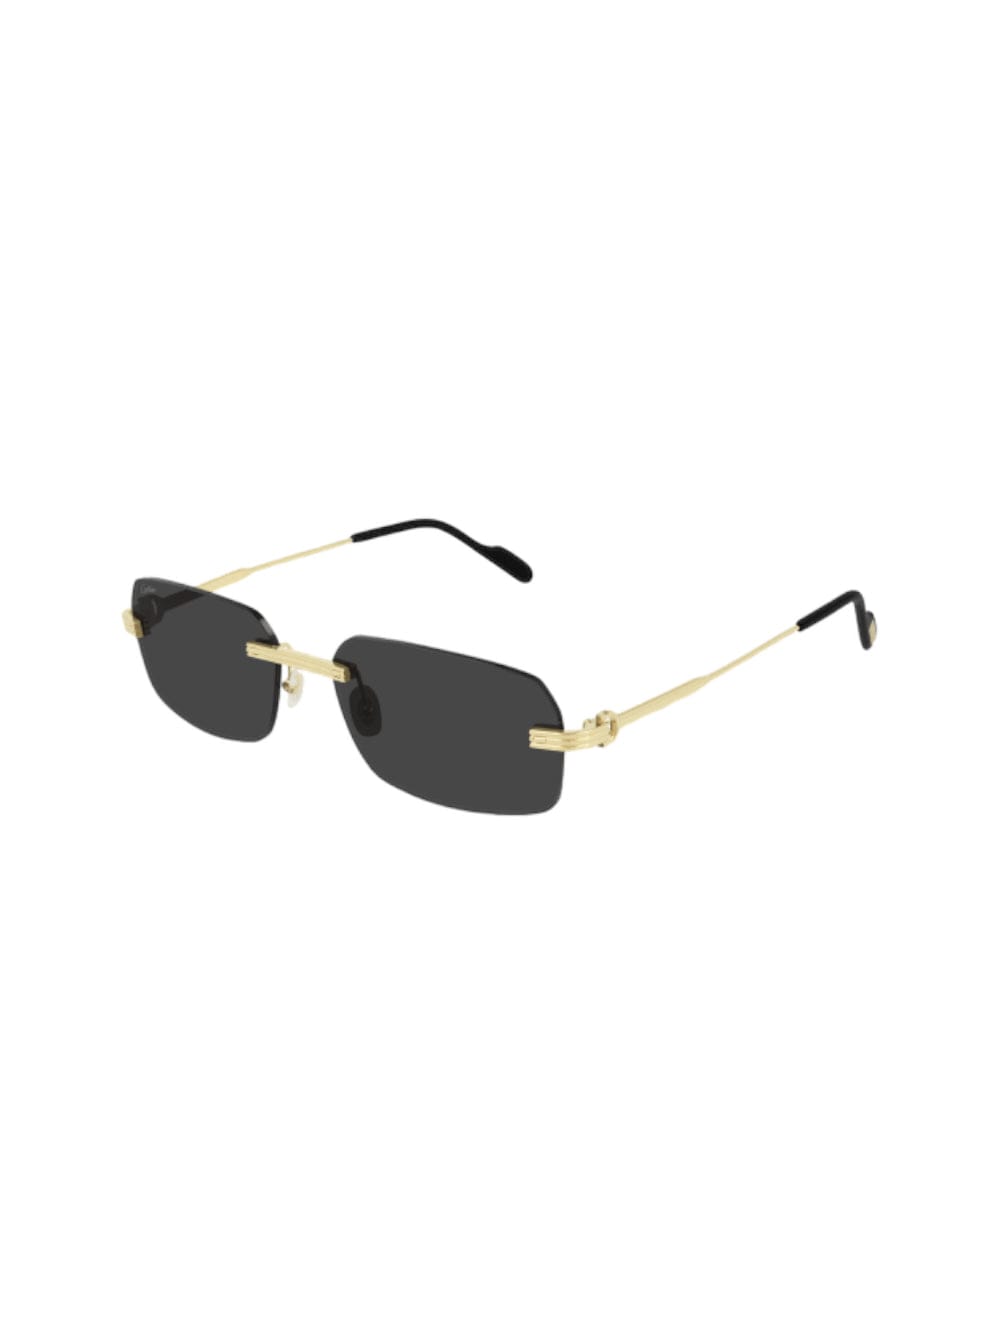 Ct 0271 - Gold Sunglasses